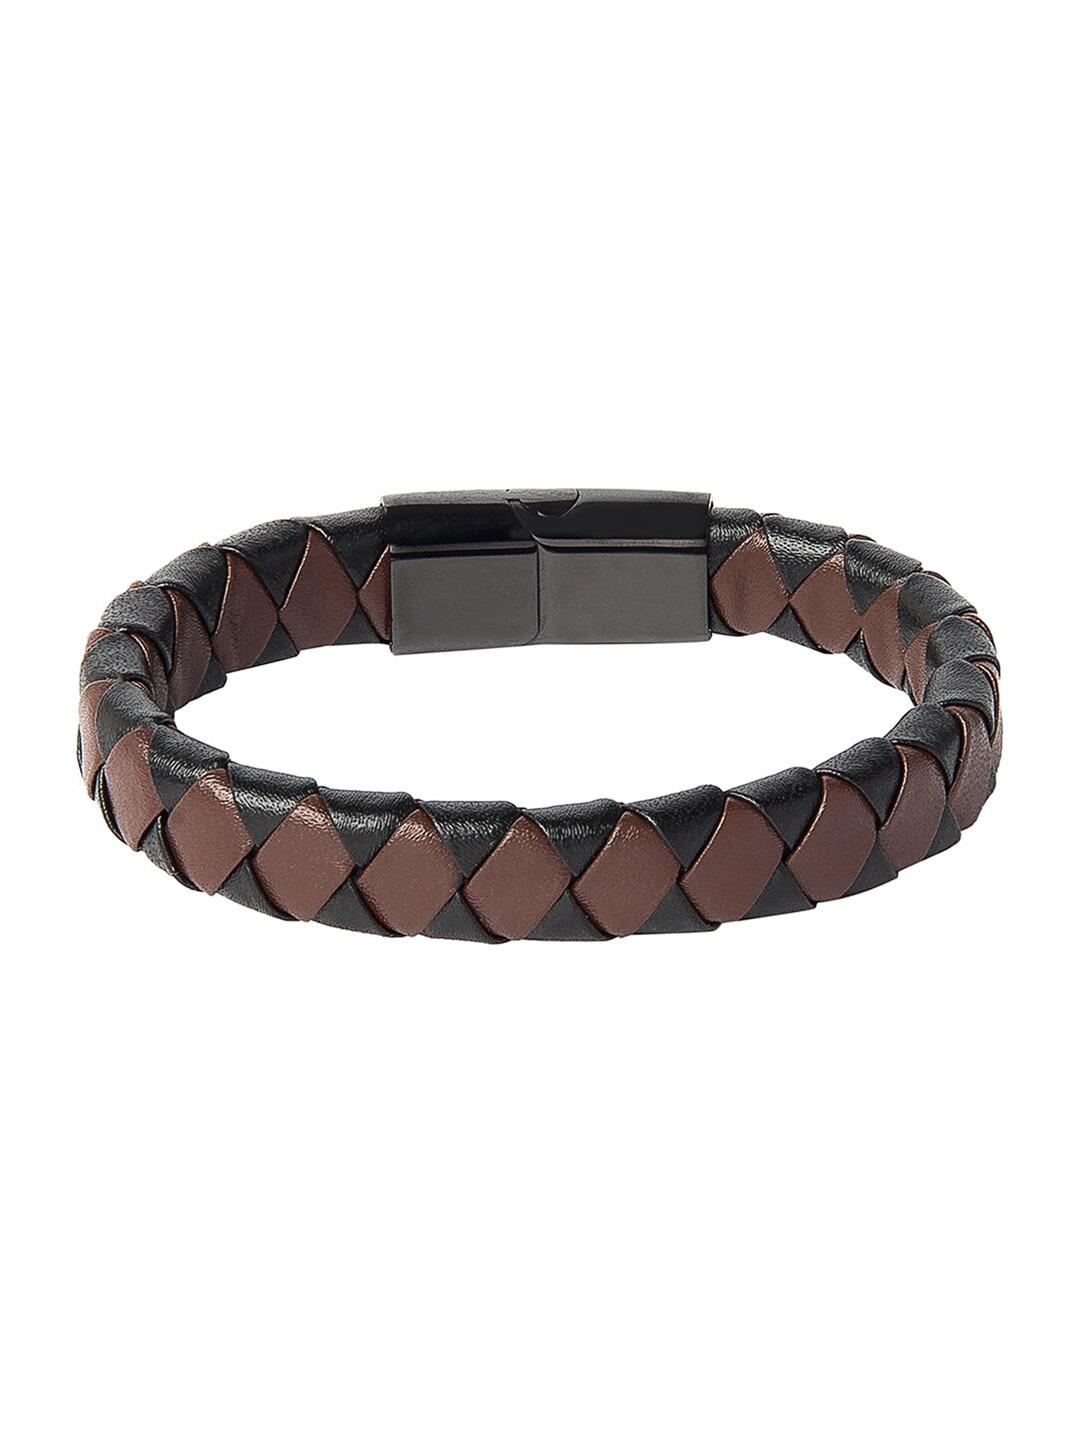 bodha men brown & black leather bracelet